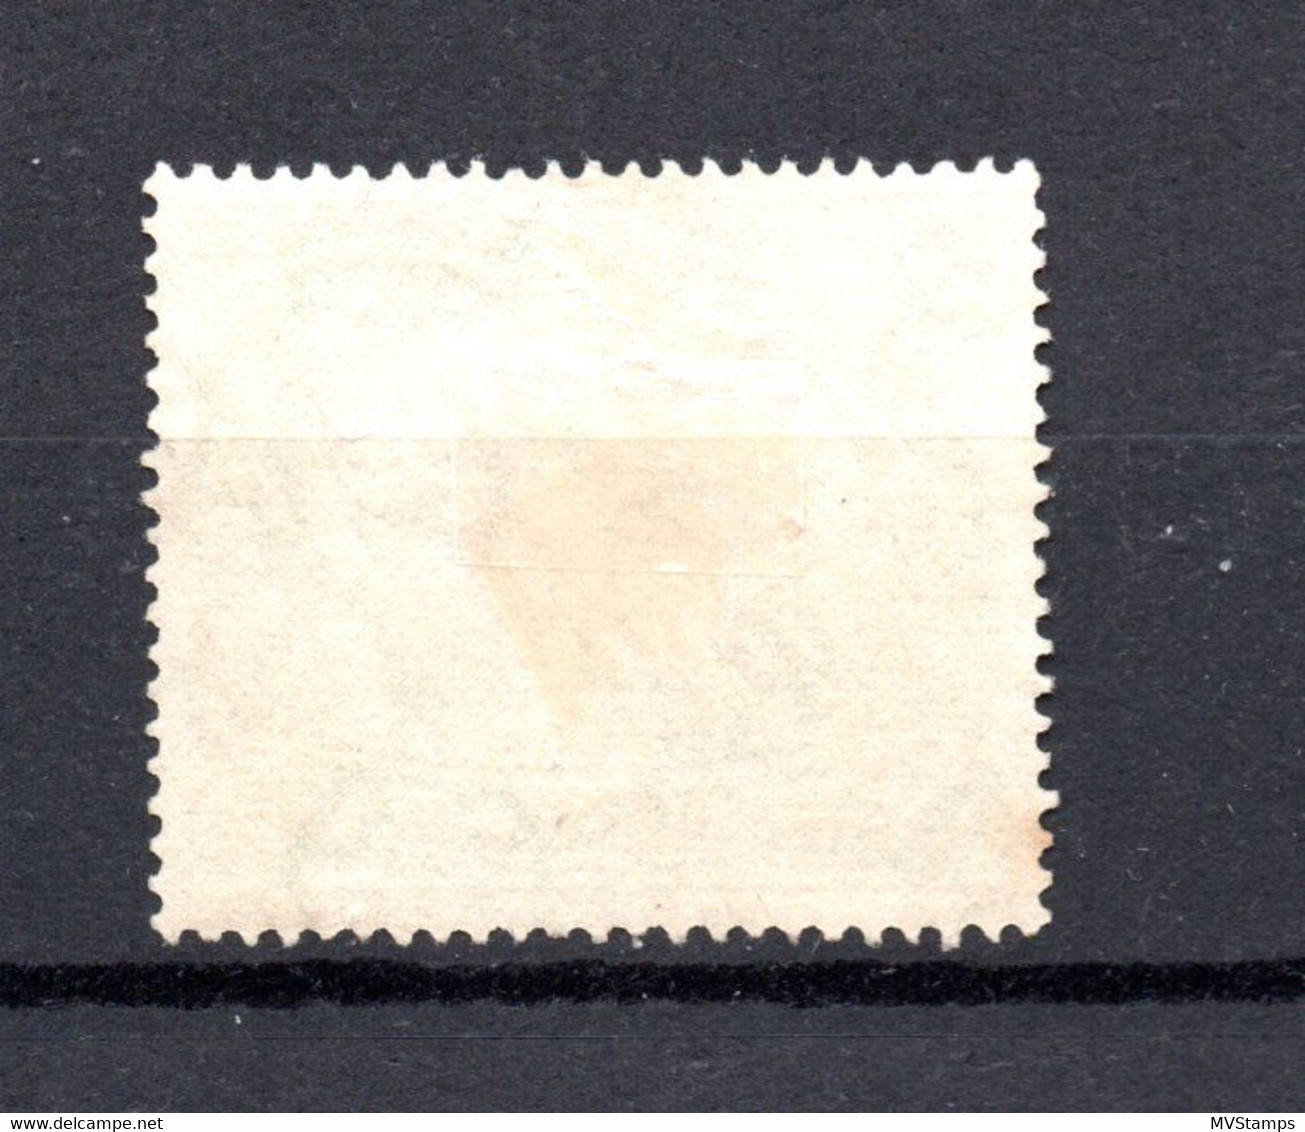 Malaya States 1926 Old $1.00 Stamp (Michel 74) Nice Used - Federation Of Malaya